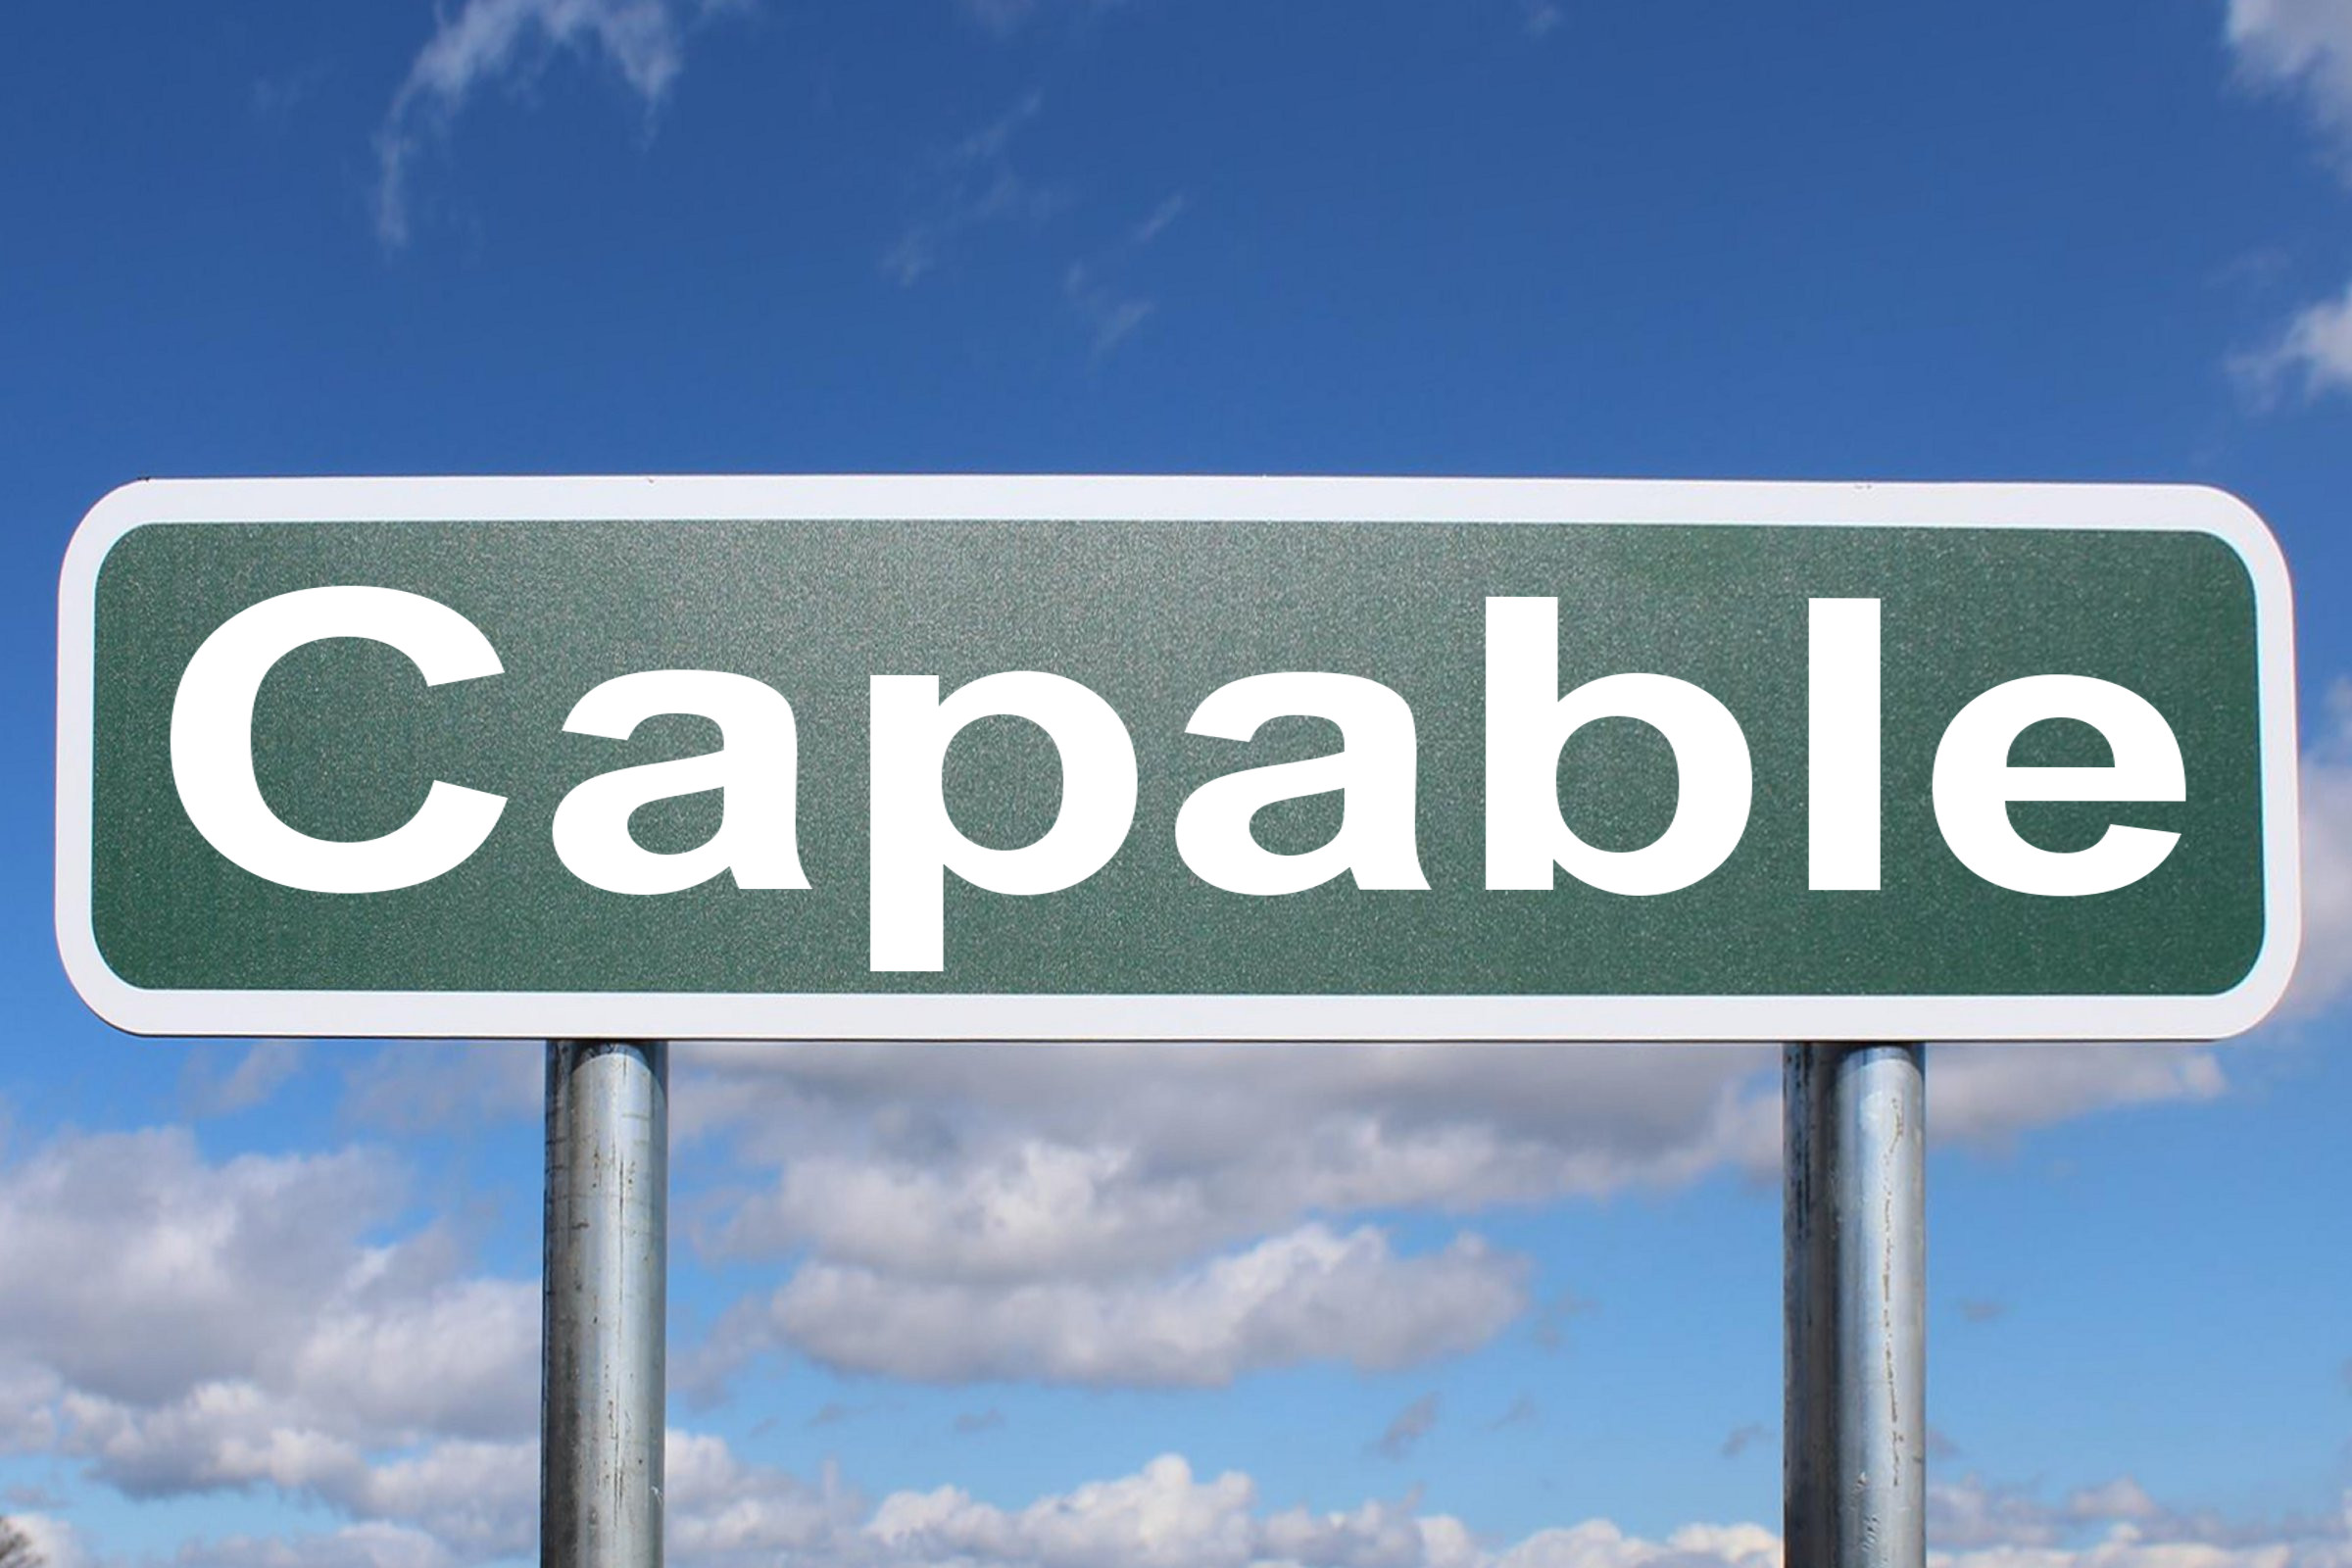 capable